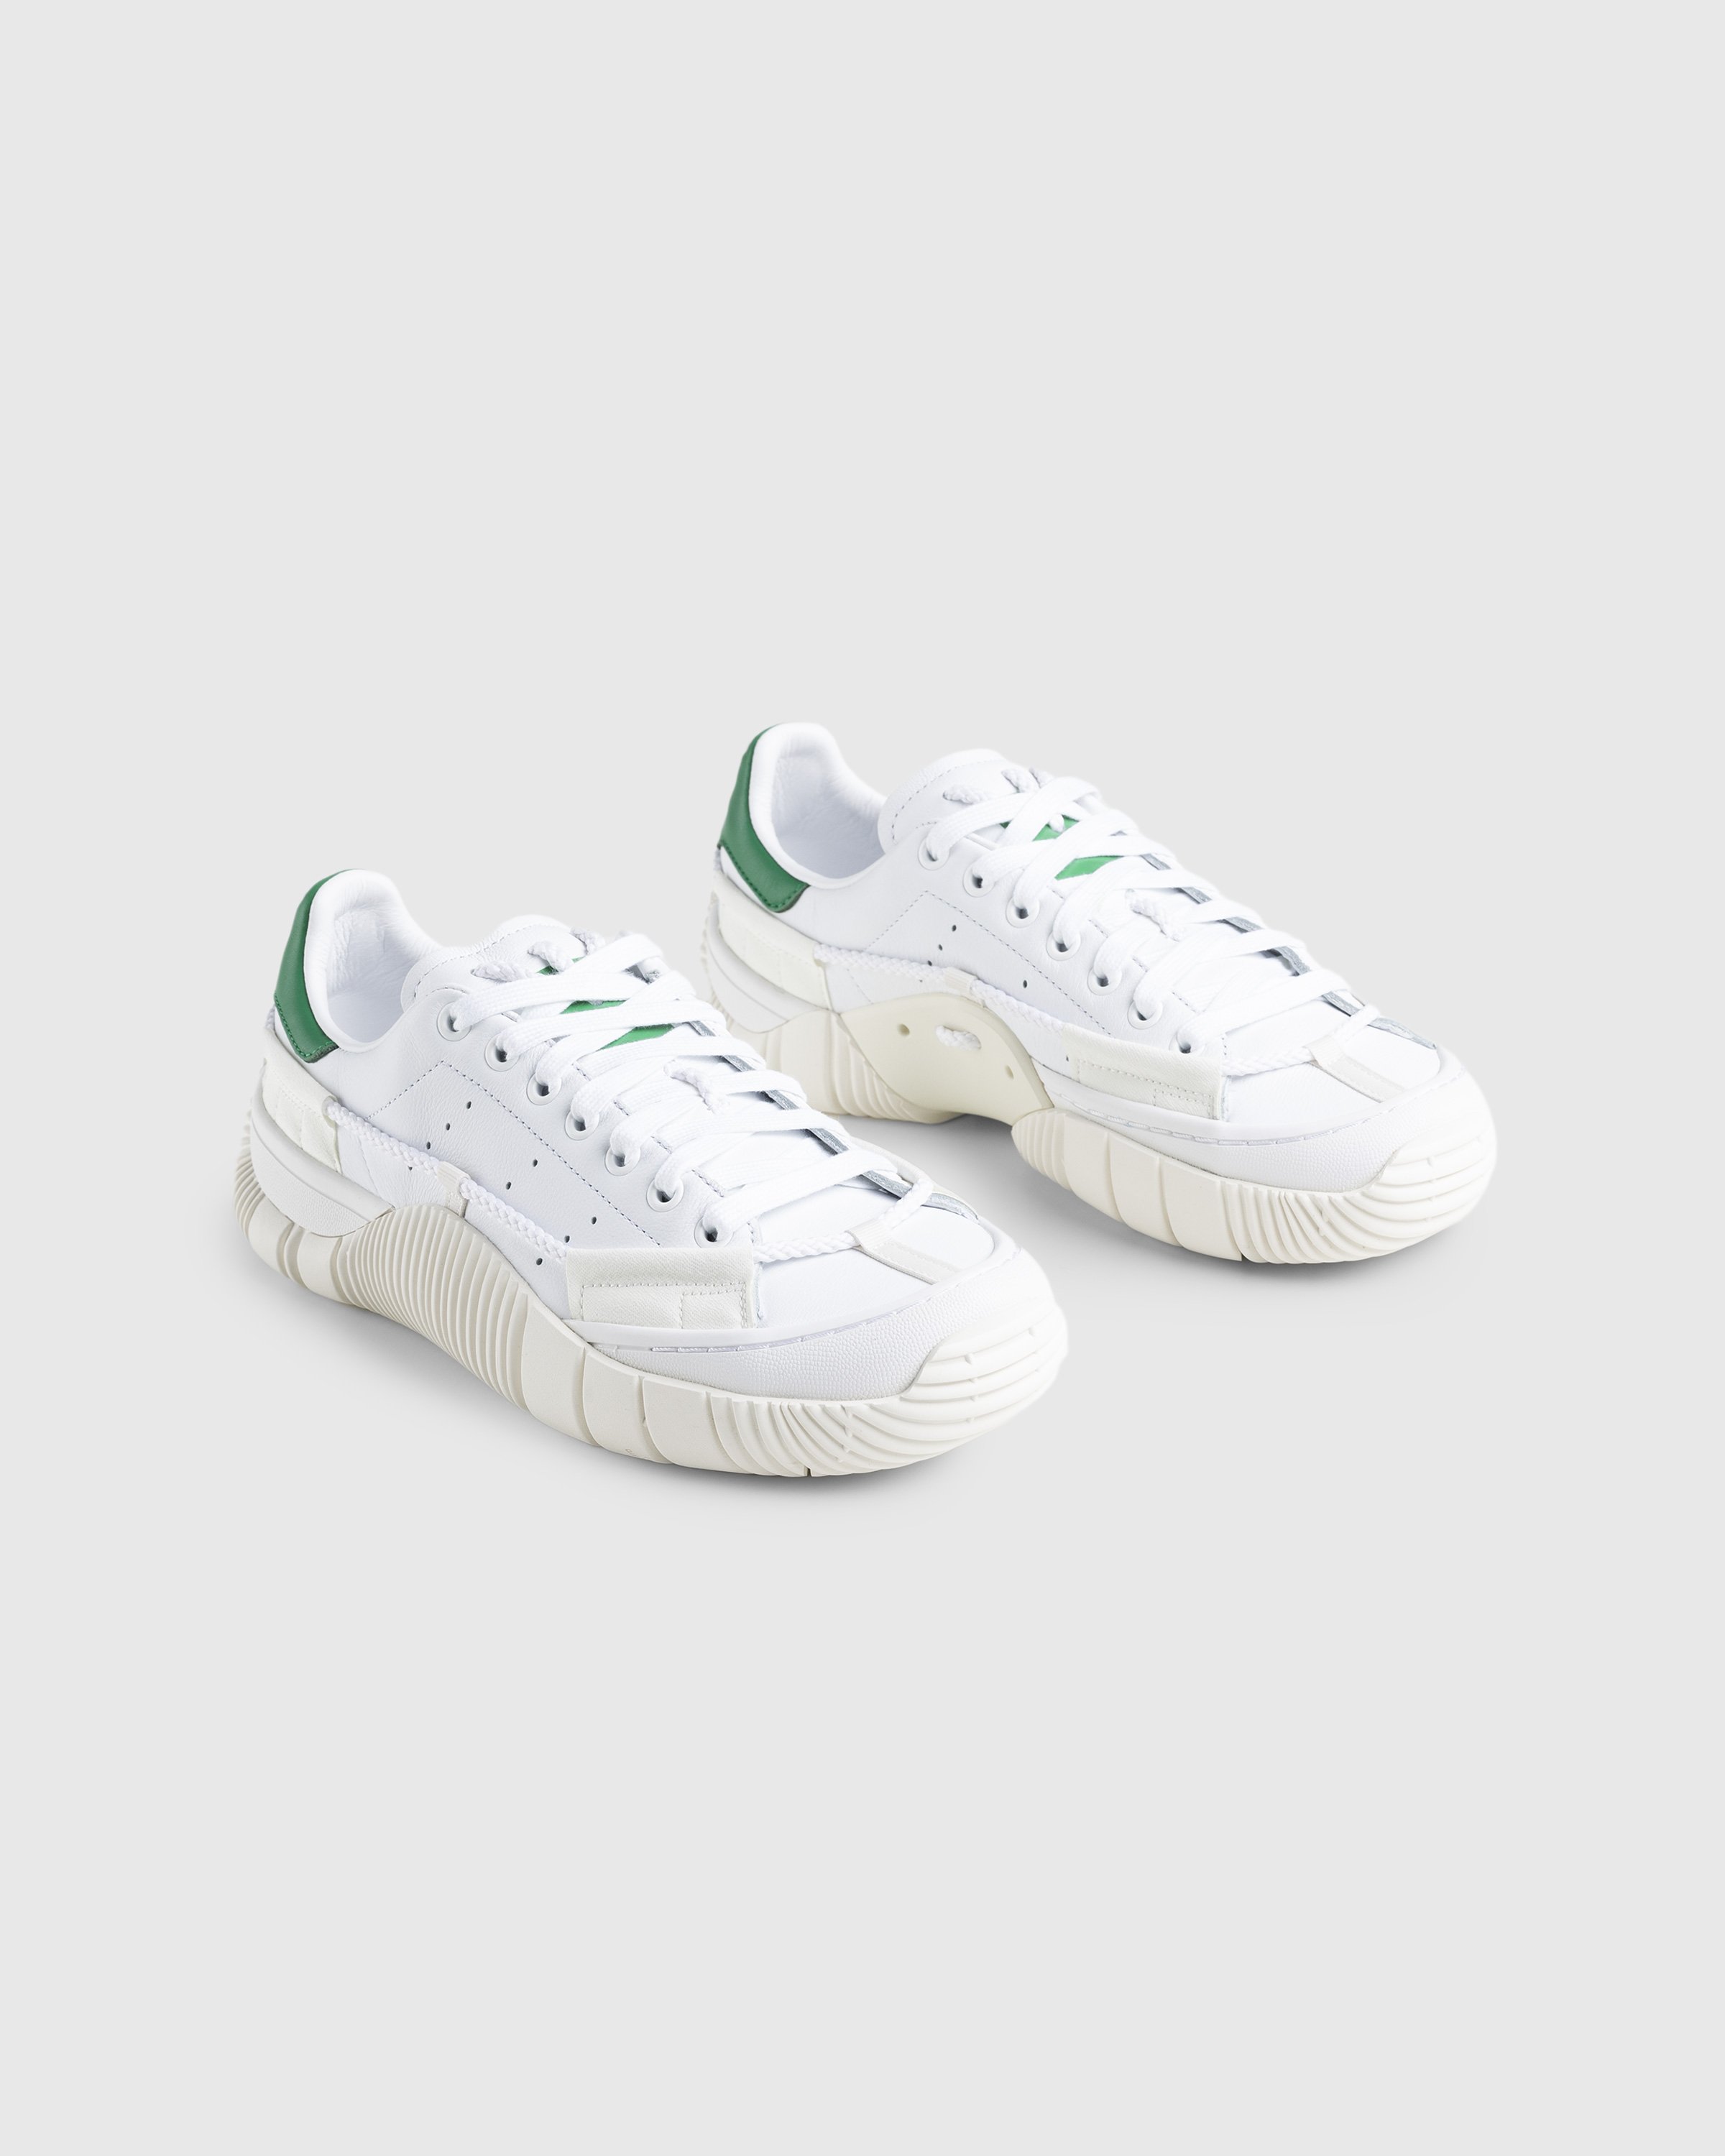 Adidas x Craig Green - Scuba Stan White - Footwear - White - Image 3